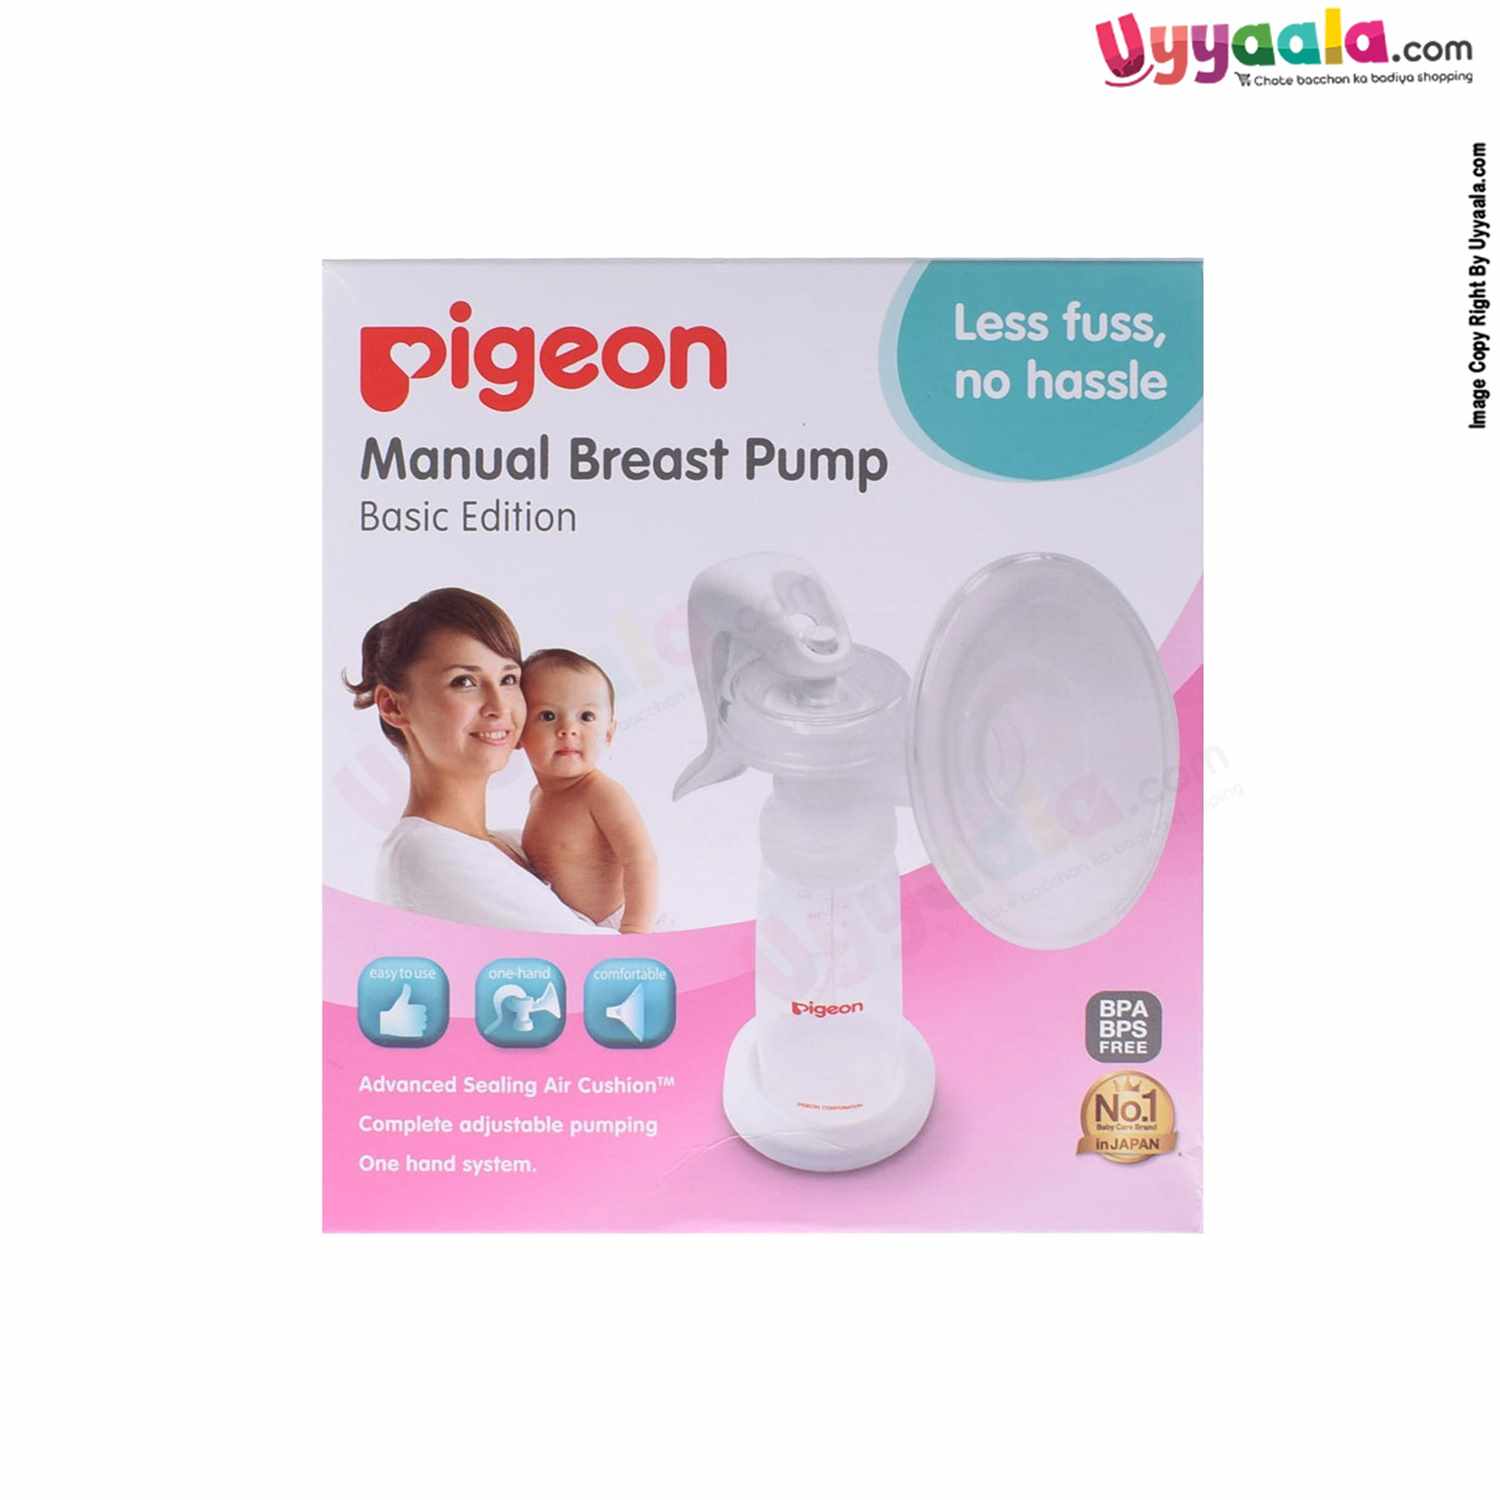 PIGEON Manual Breast Pump Basic Edition